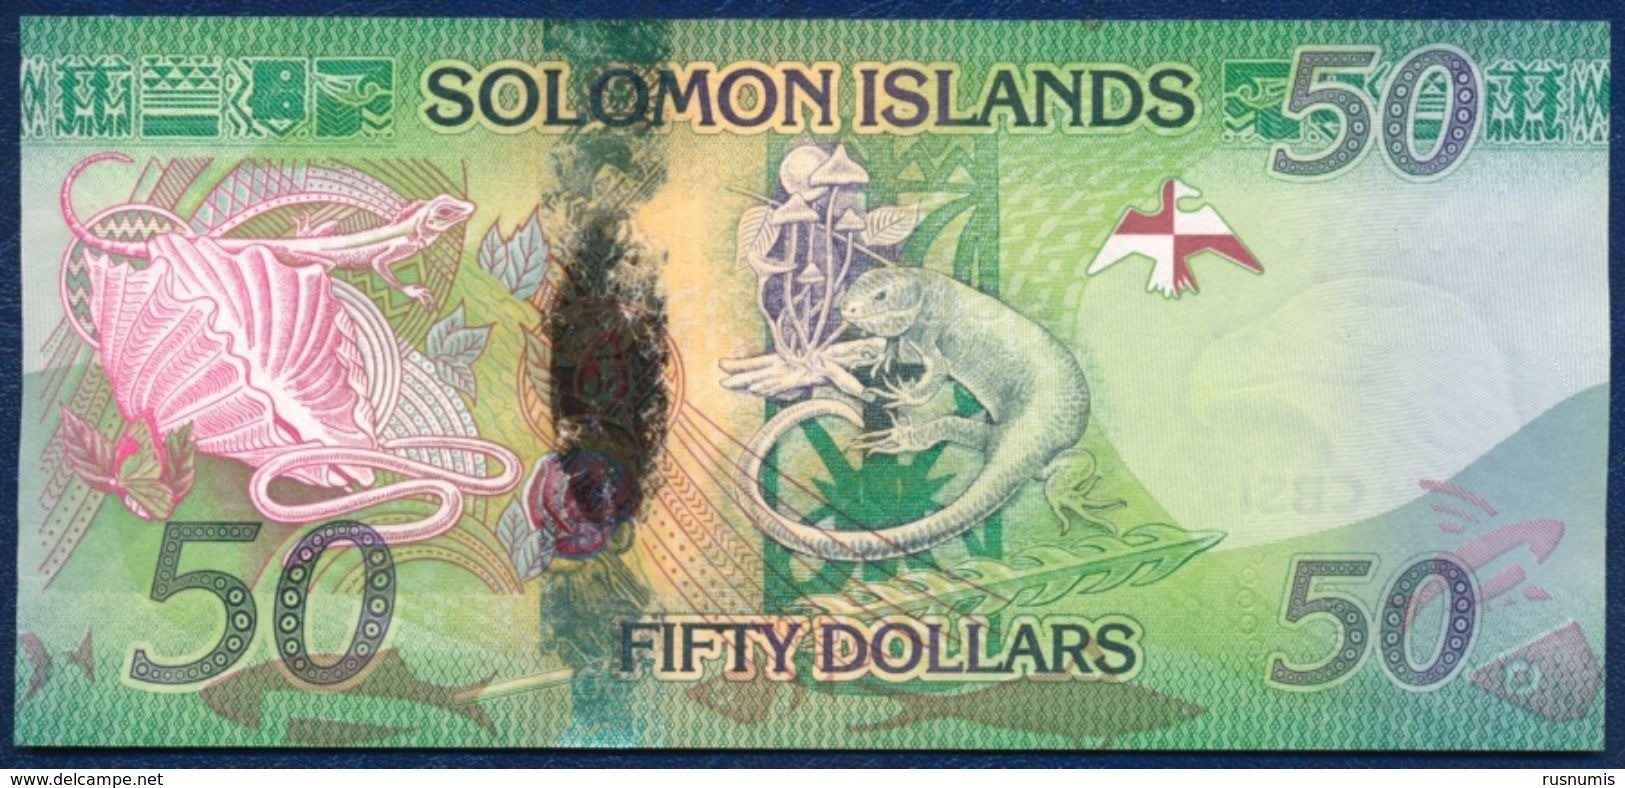 SOLOMON ISLANDS 50 DOLLARS P-35a LIZARD 2013 UNC - Salomons